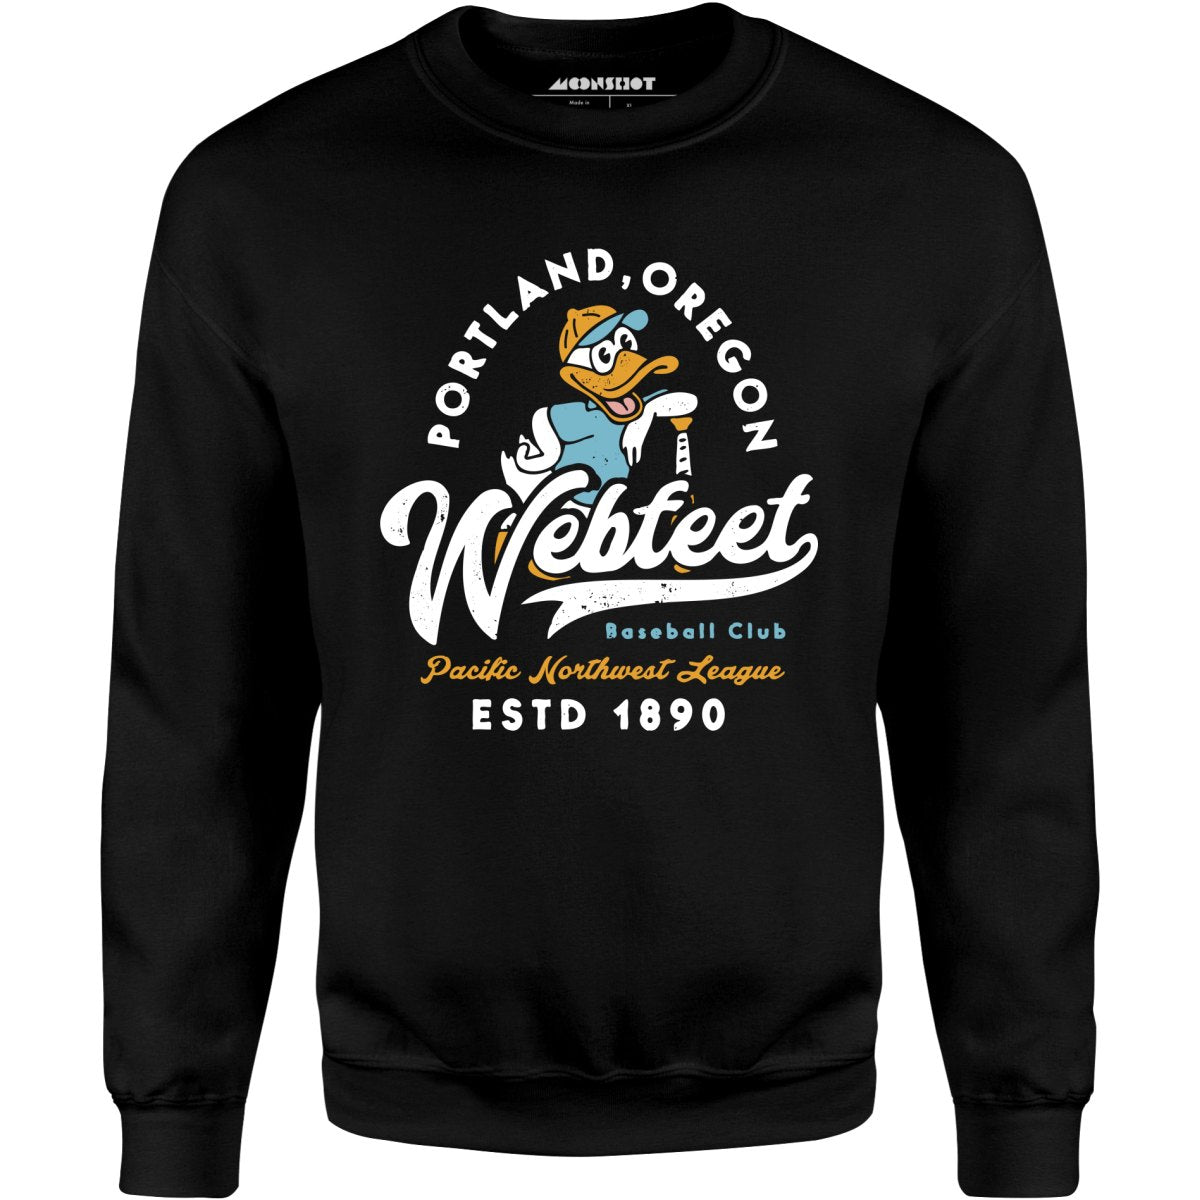 Portland Webfeet - Oregon - Vintage Defunct Baseball Teams - Unisex Sweatshirt